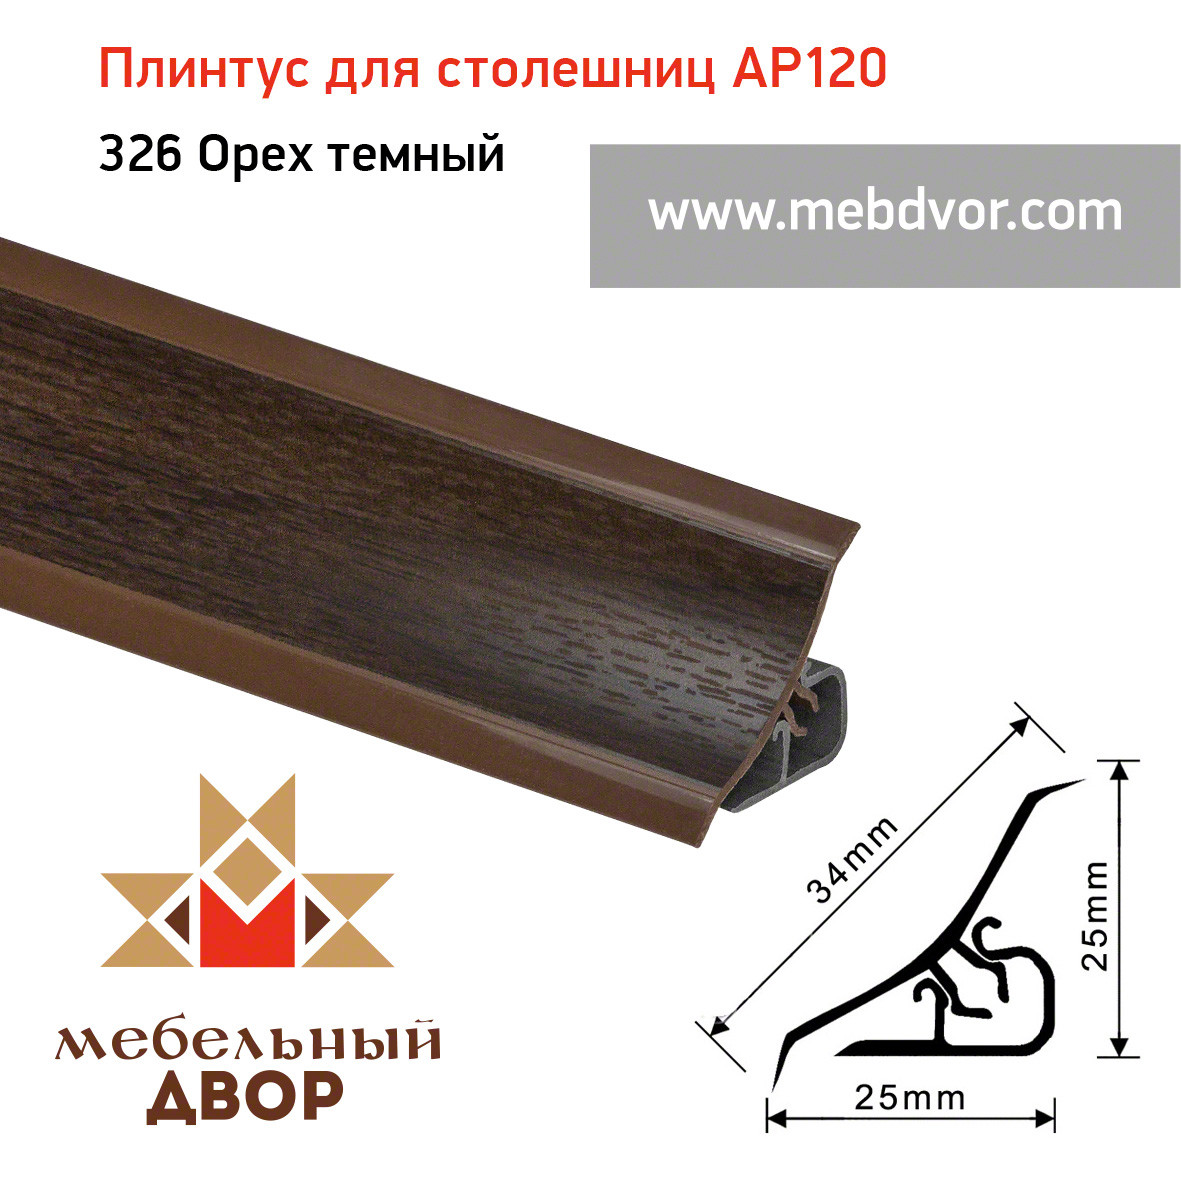 Плинтус для столешниц AP120 (326_Орех темный), 3000 mm